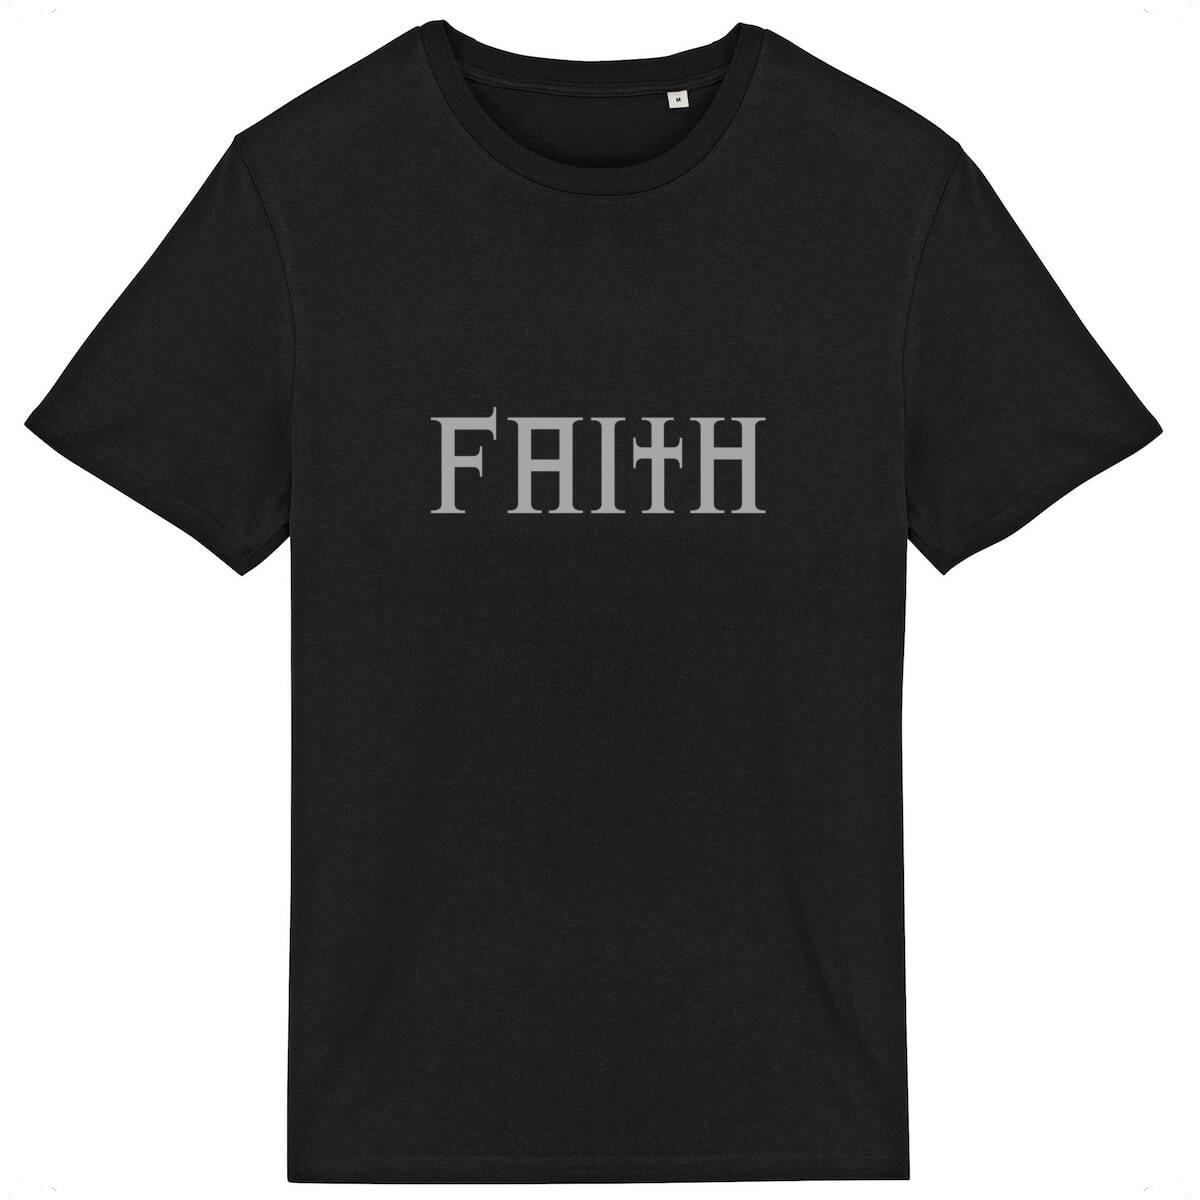 FAITH Premium T-Shirt